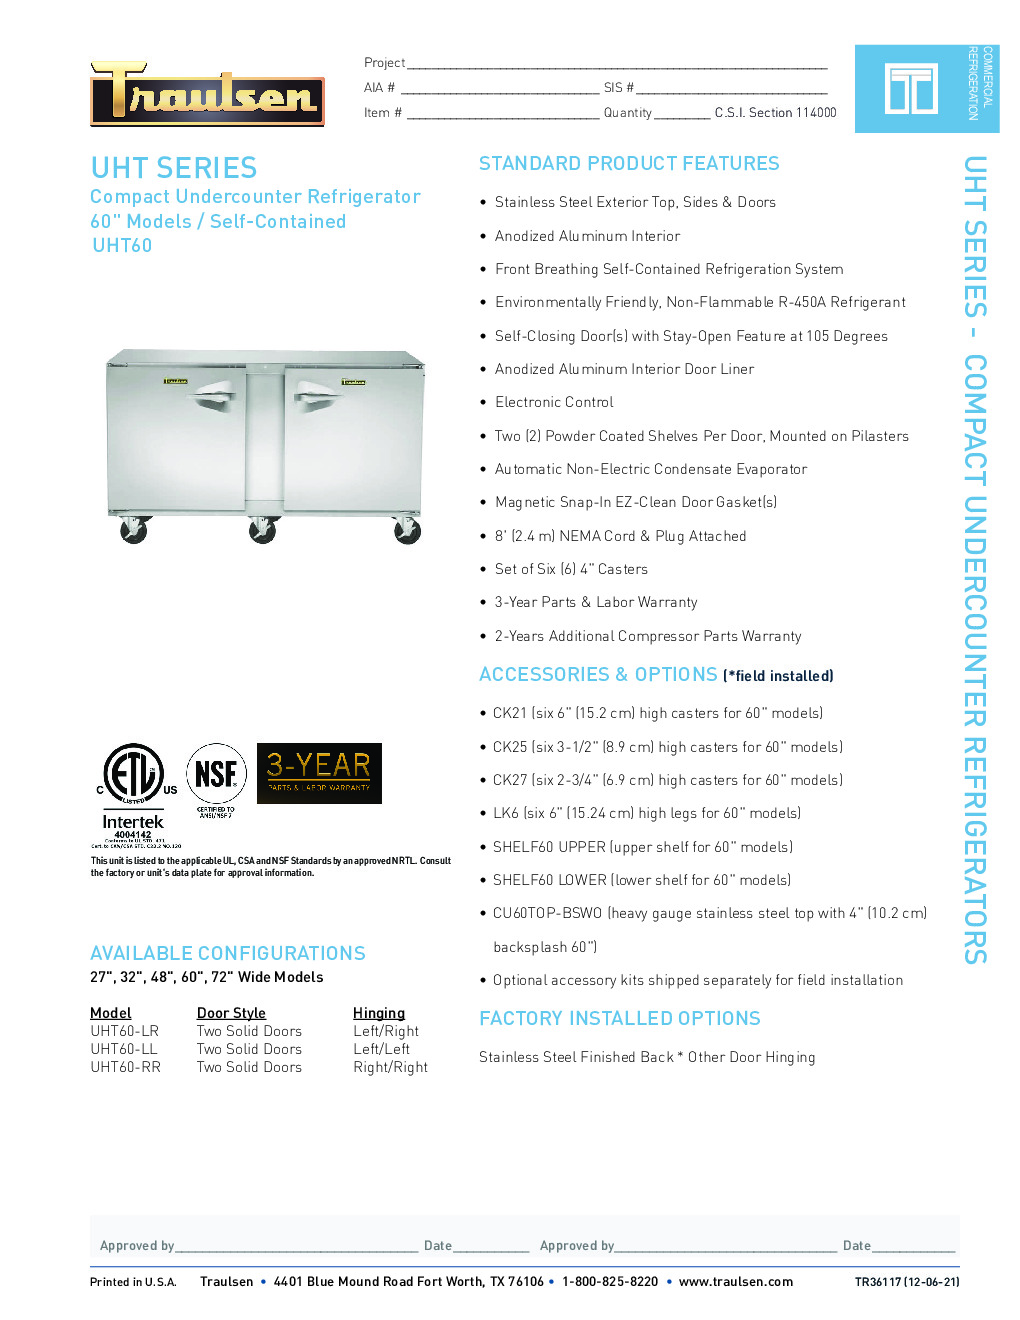 Traulsen UHT60-LR Reach-In Undercounter Refrigerator